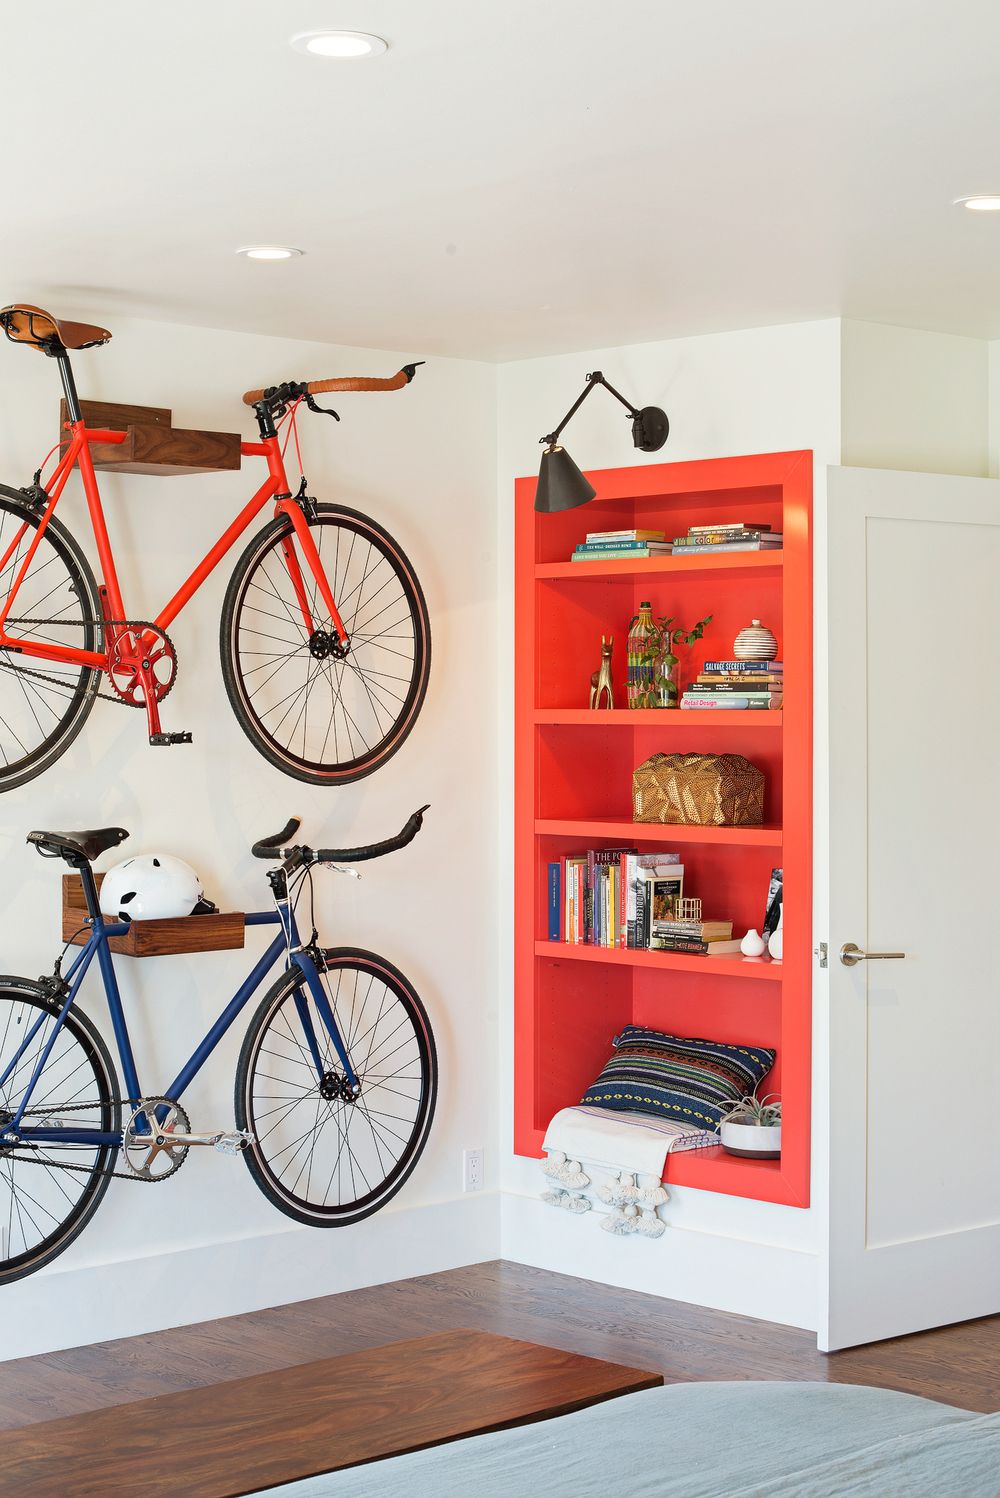 25 Genius DIY Storage Solutions - Easy Home Storage Ideas